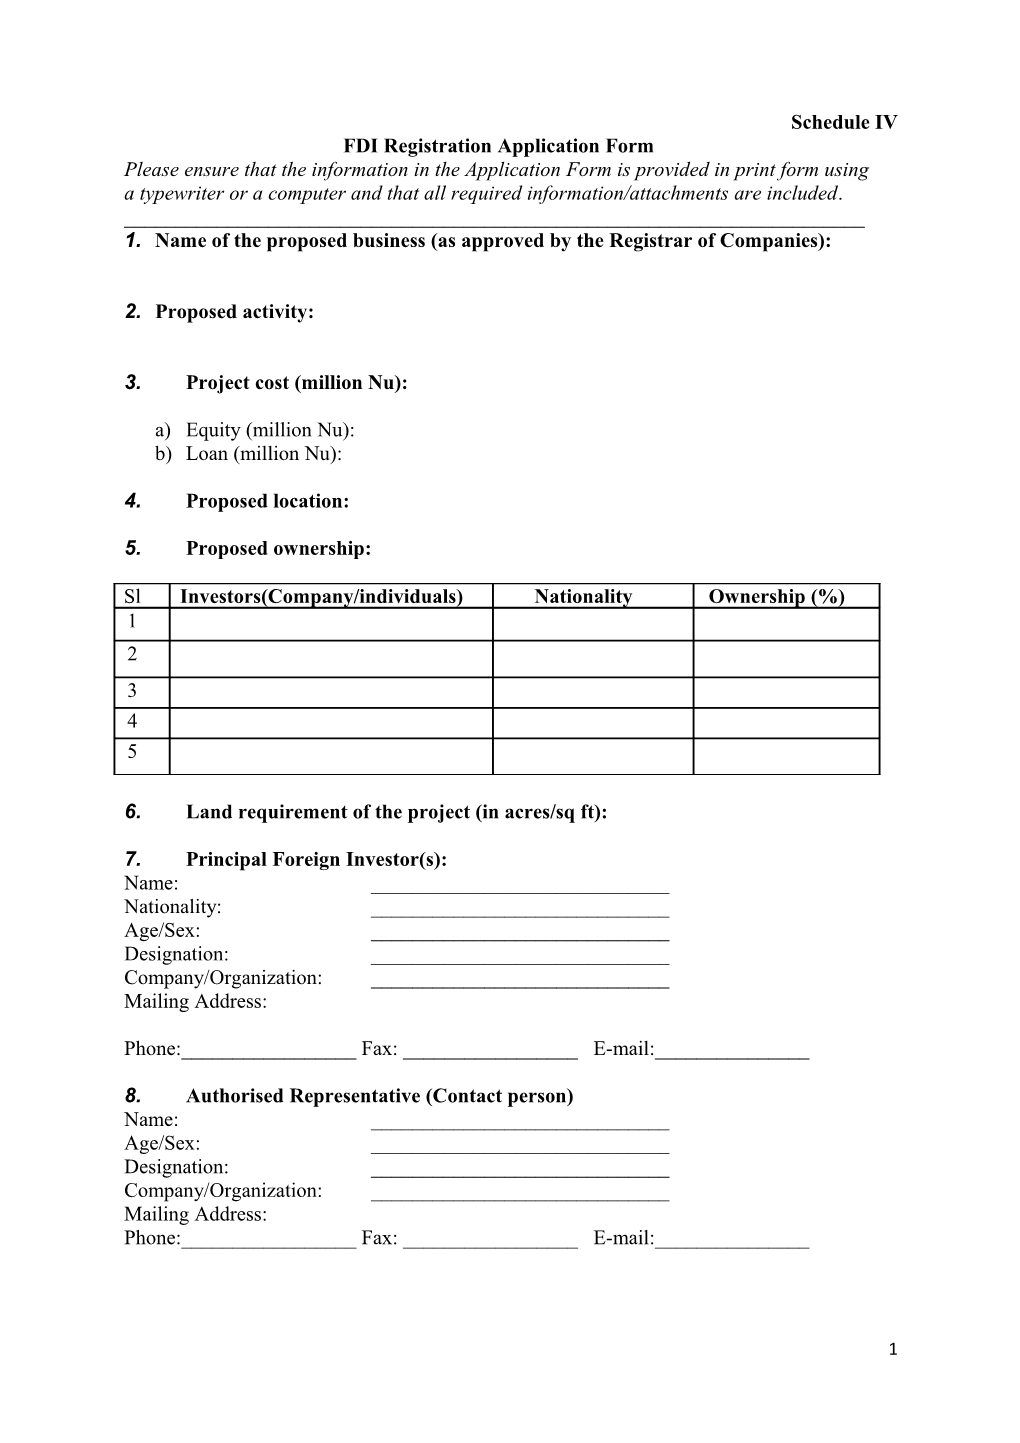 FDI Registration Application Form